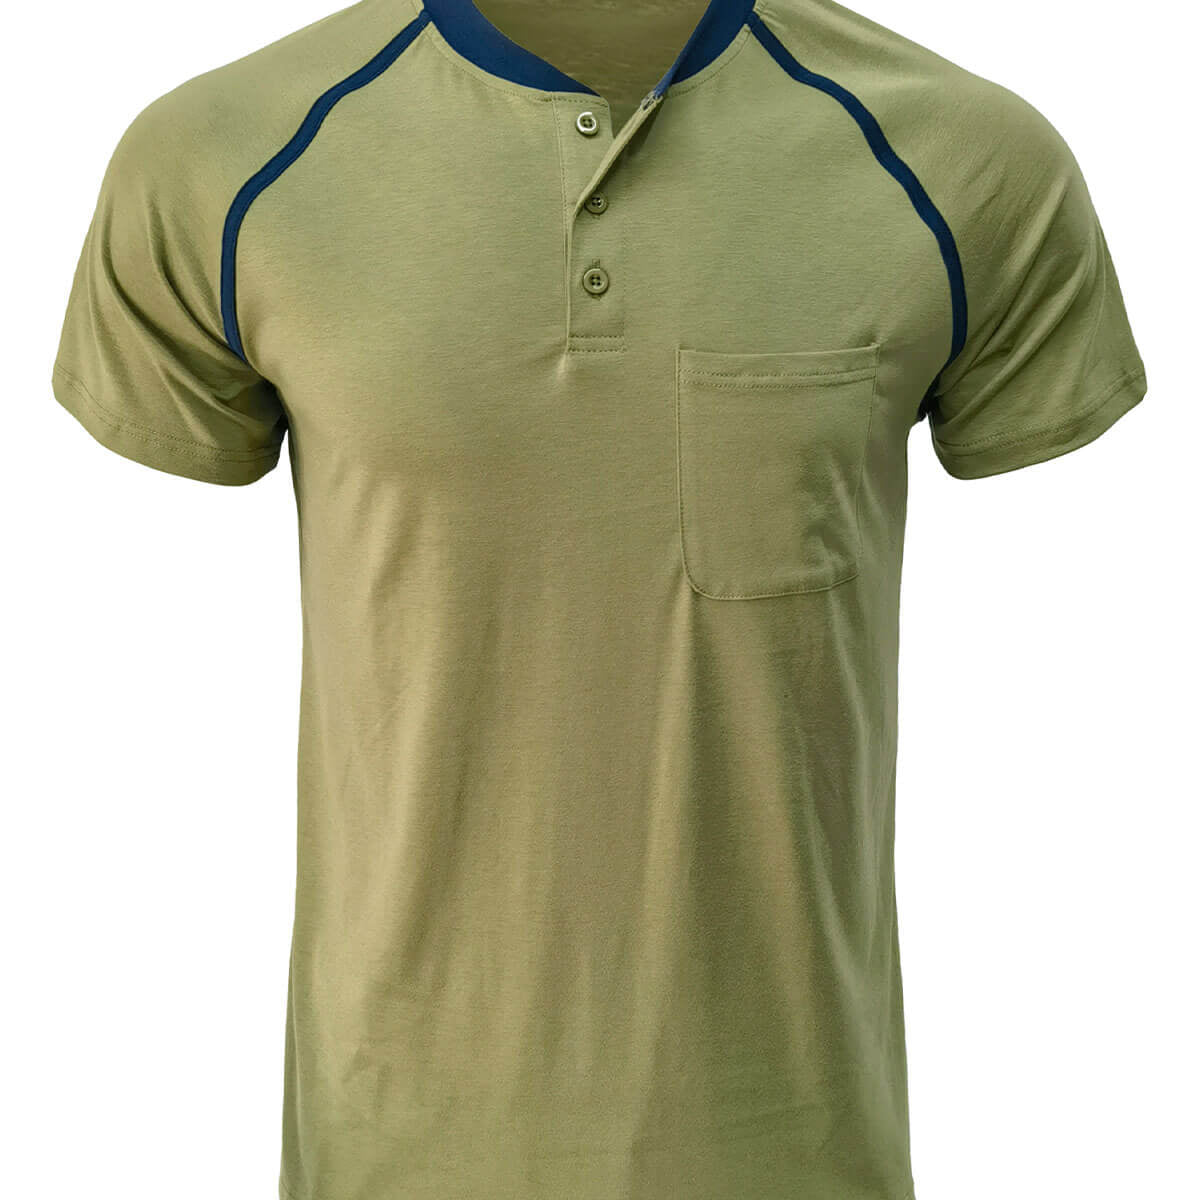 Men's Breathable Casual Pocket Short Sleeve T-Shirt